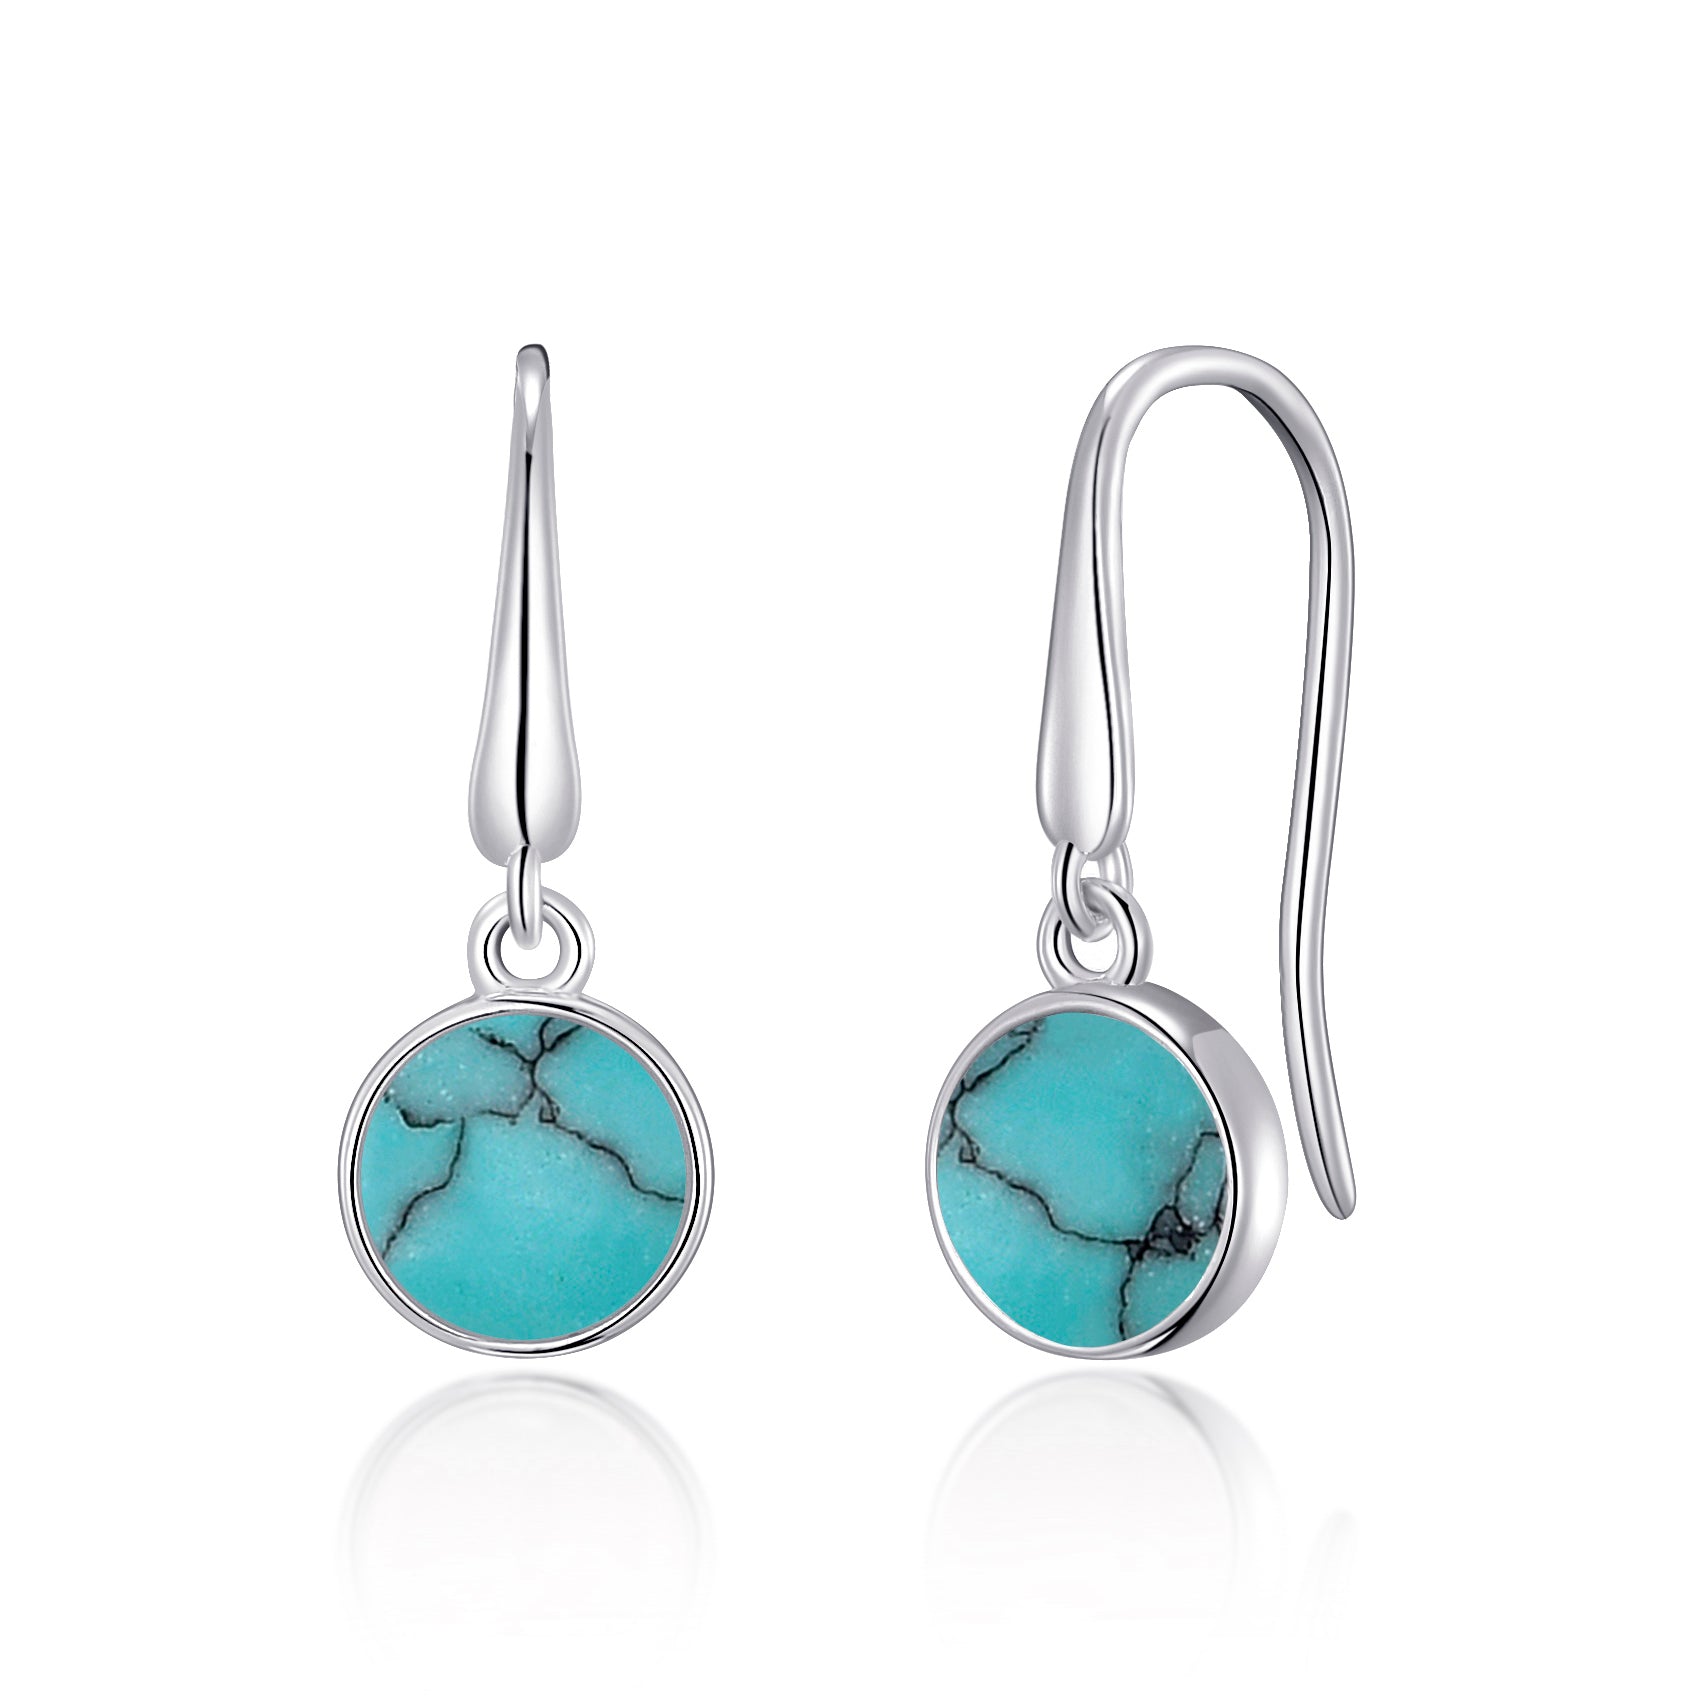 Synthetic Turquoise Drop Earrings by Philip Jones Jewellery